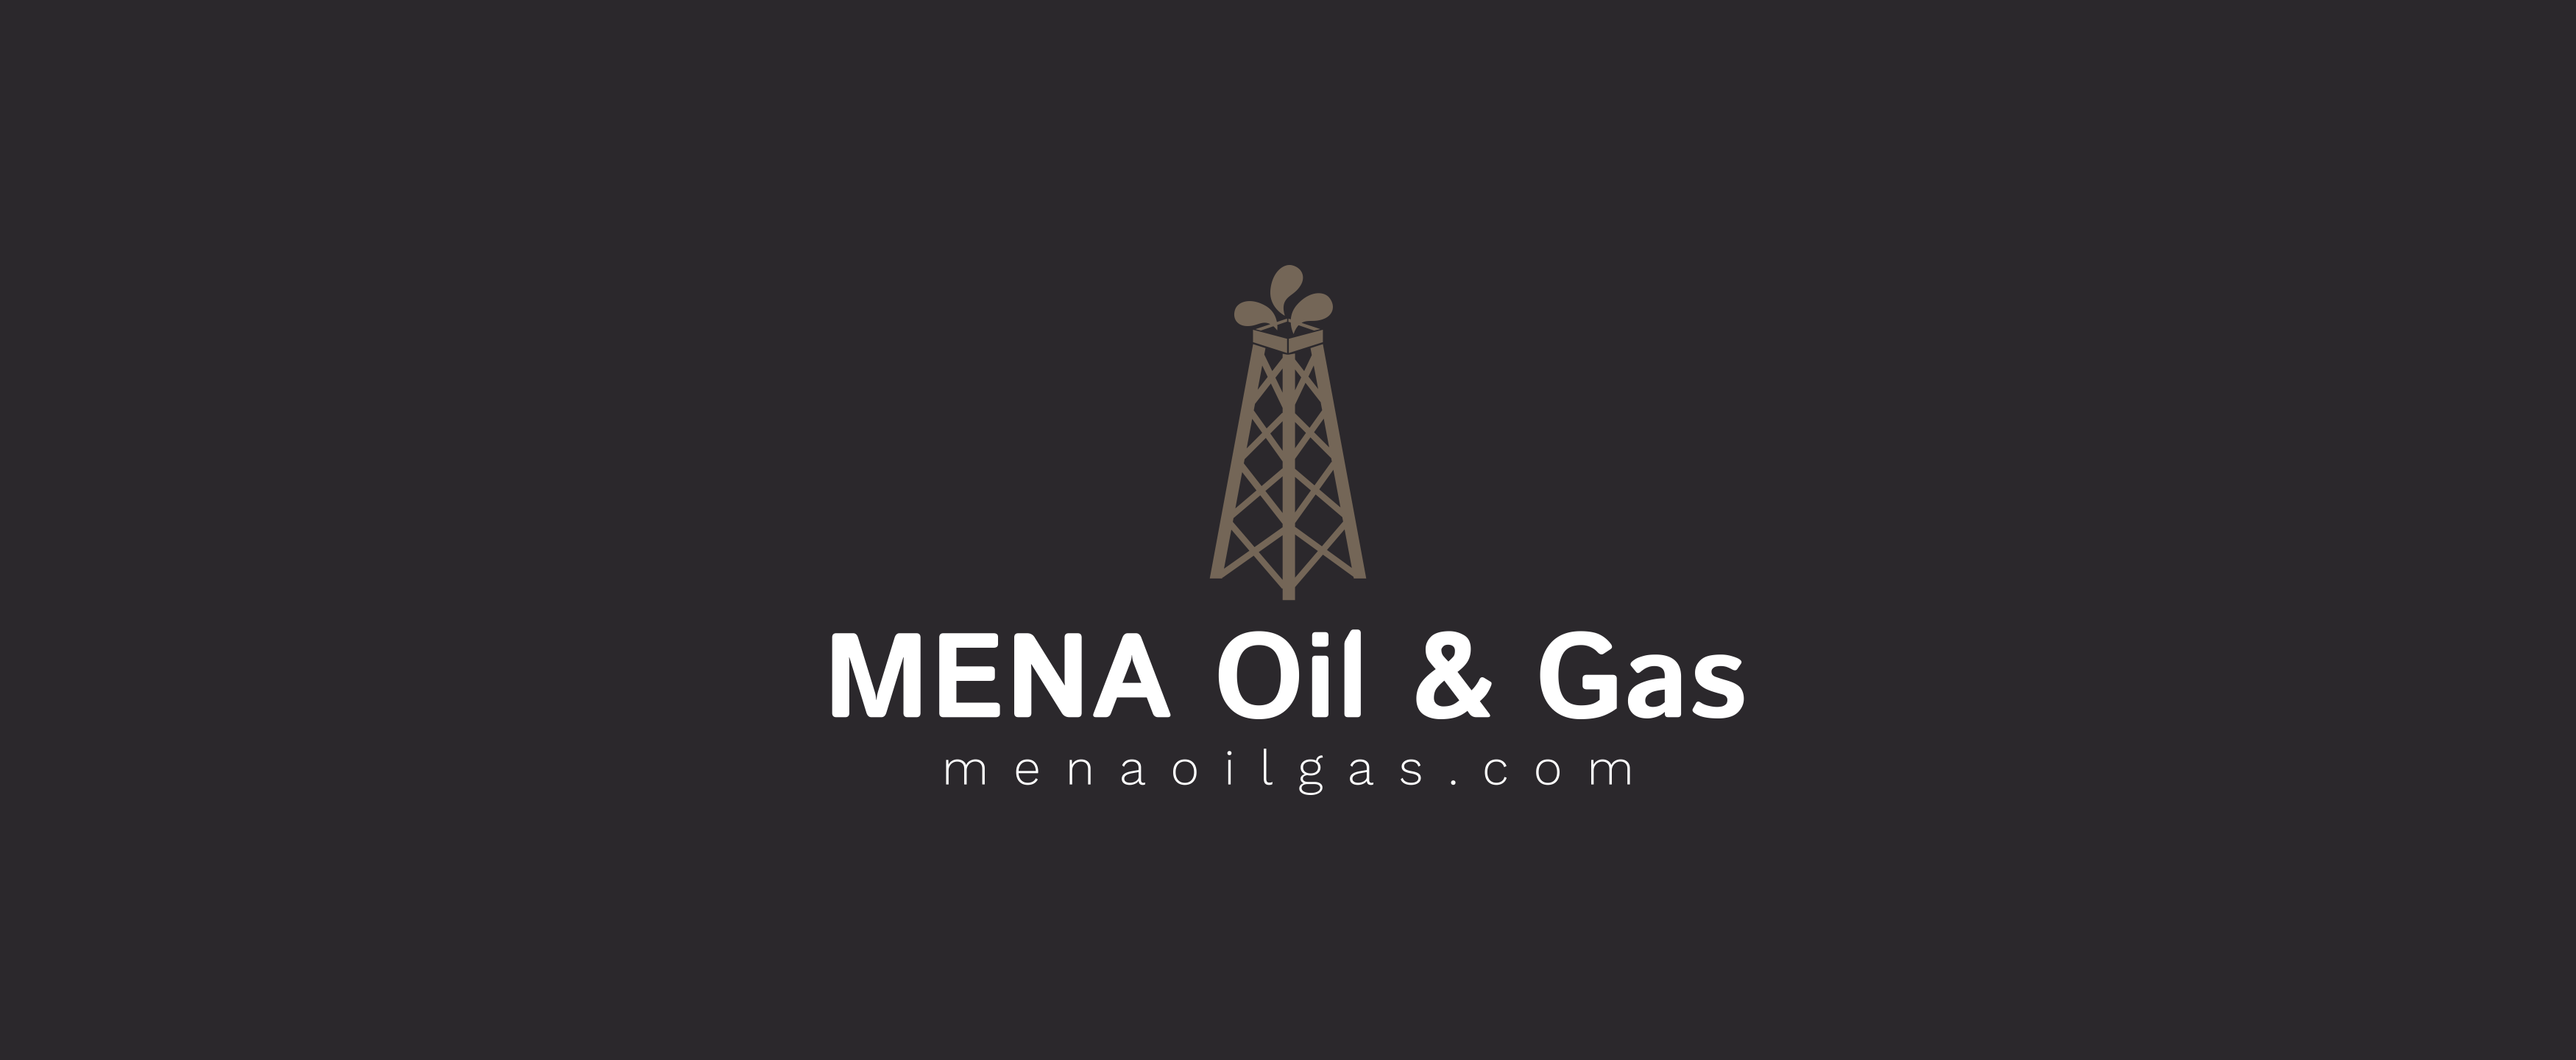 MENA Oil & Gas